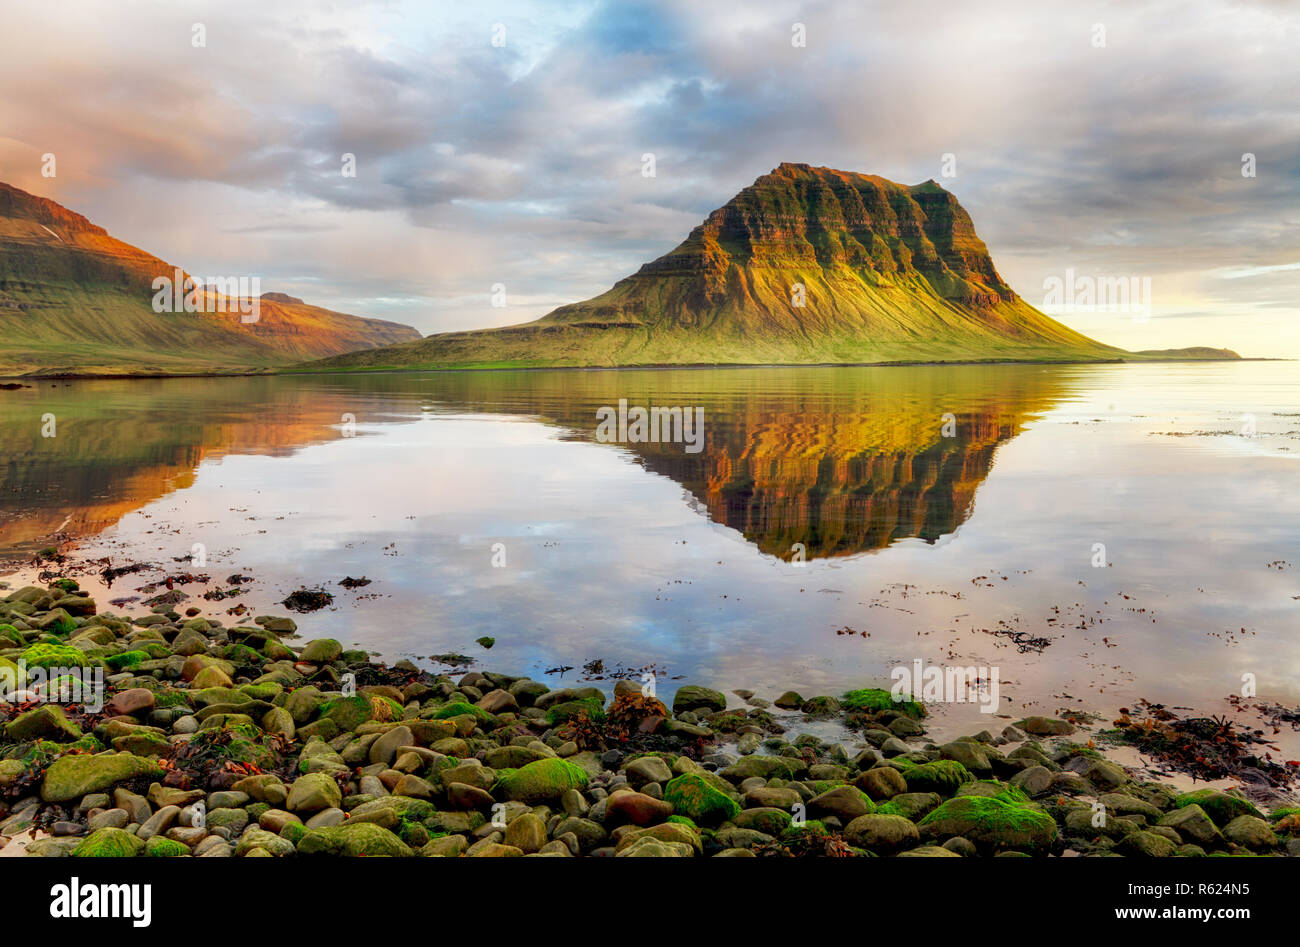 Sea coast with mountain reflection, Iceland Stock Photo